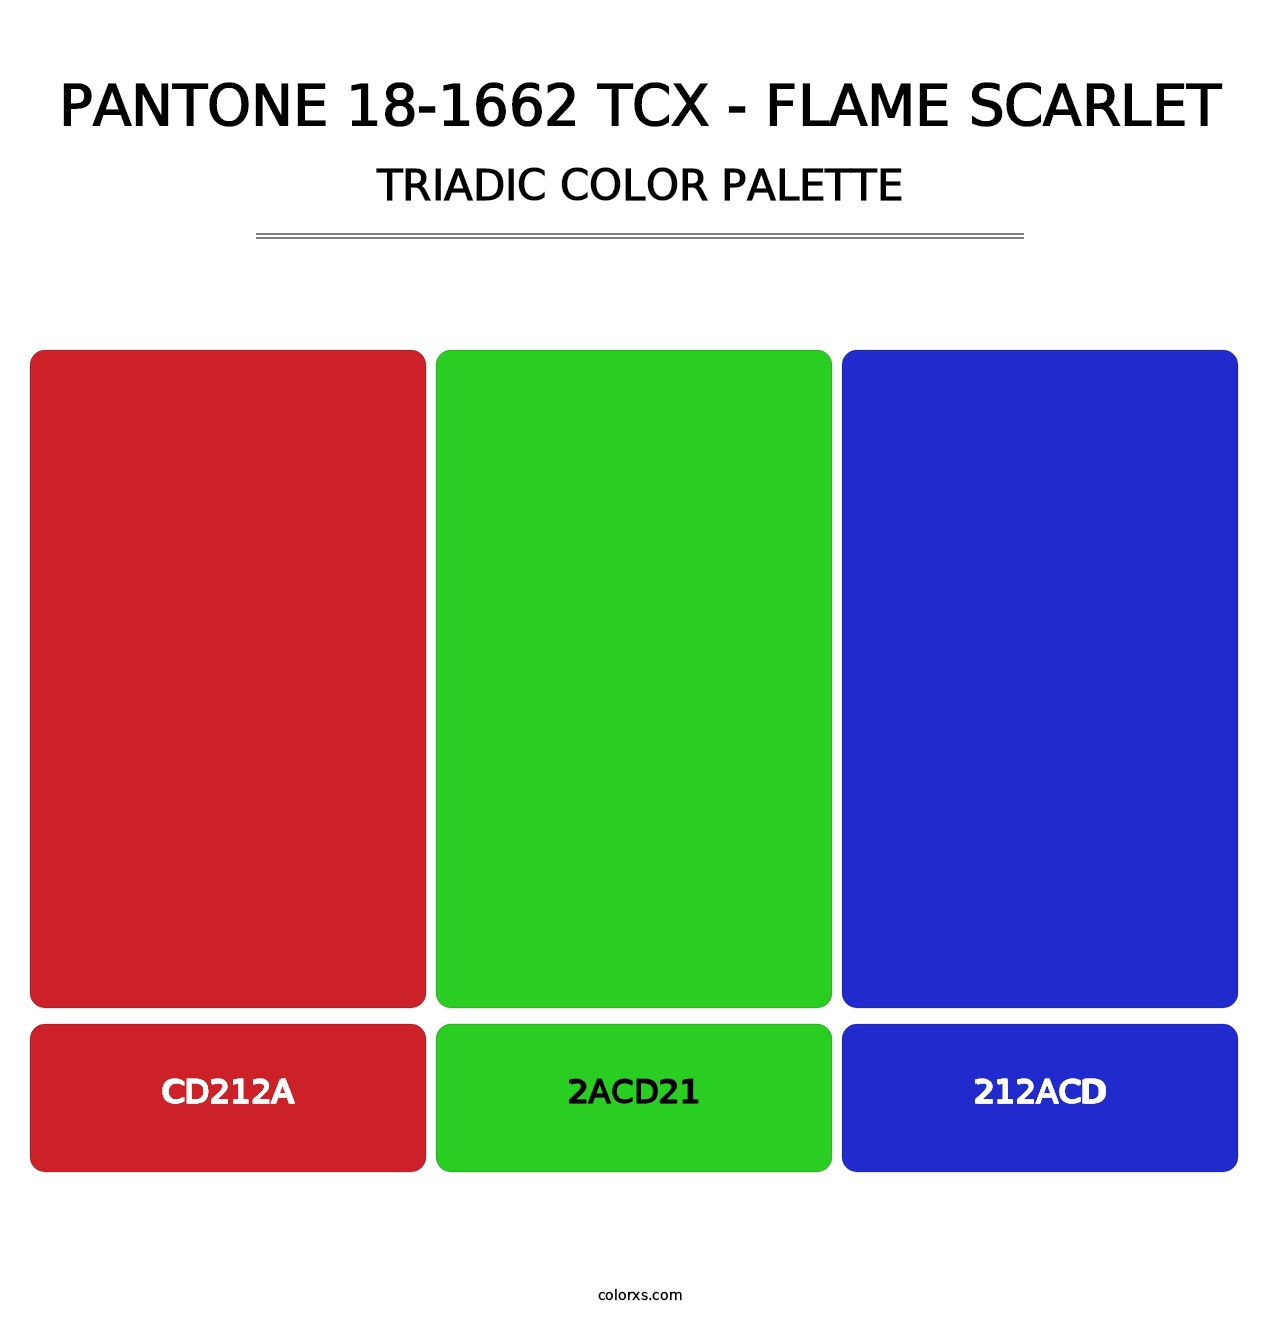 PANTONE 18-1662 TCX - Flame Scarlet - Triadic Color Palette